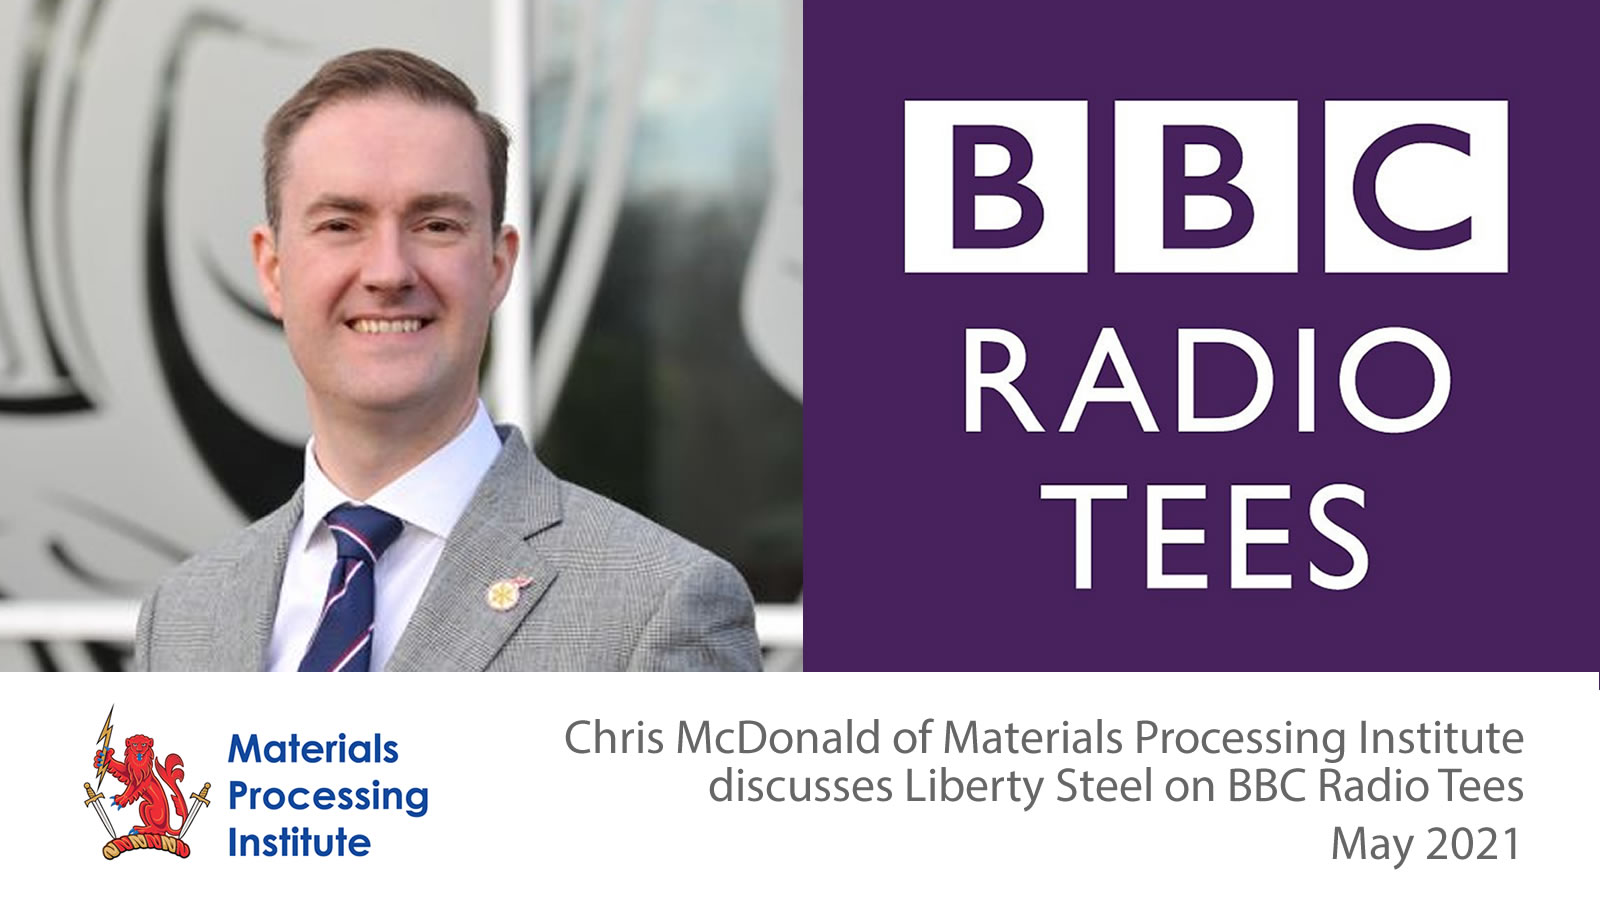 Chris McDonald discussing Liberty Steel on BBC Radio Tees - May 2021